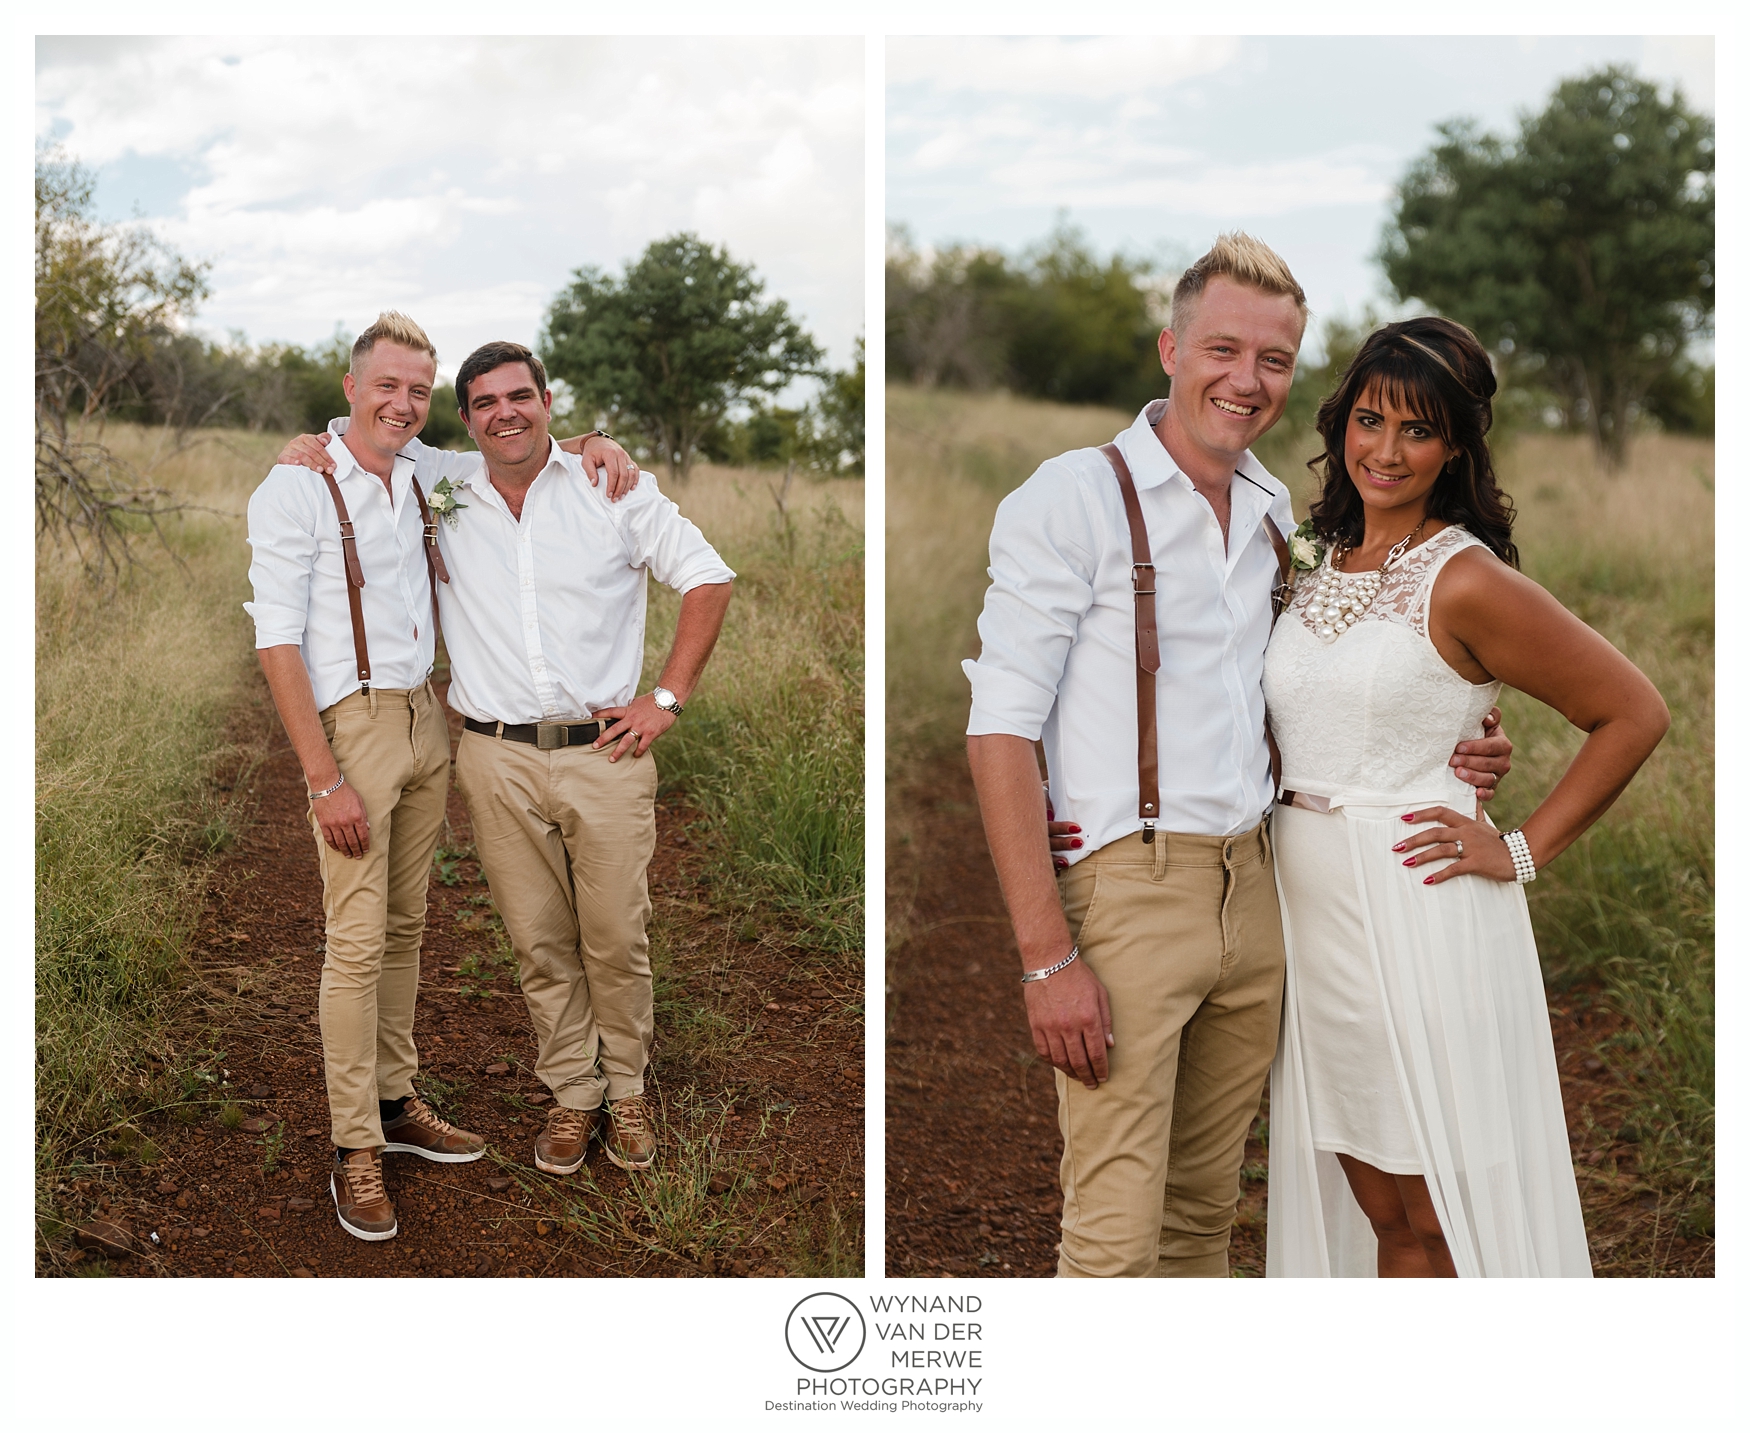 WynandvanderMerwe_weddingphotography_bushveldwedding_northam_bushveld_limpopowedding_limpopo_southafrica-208-1.jpg